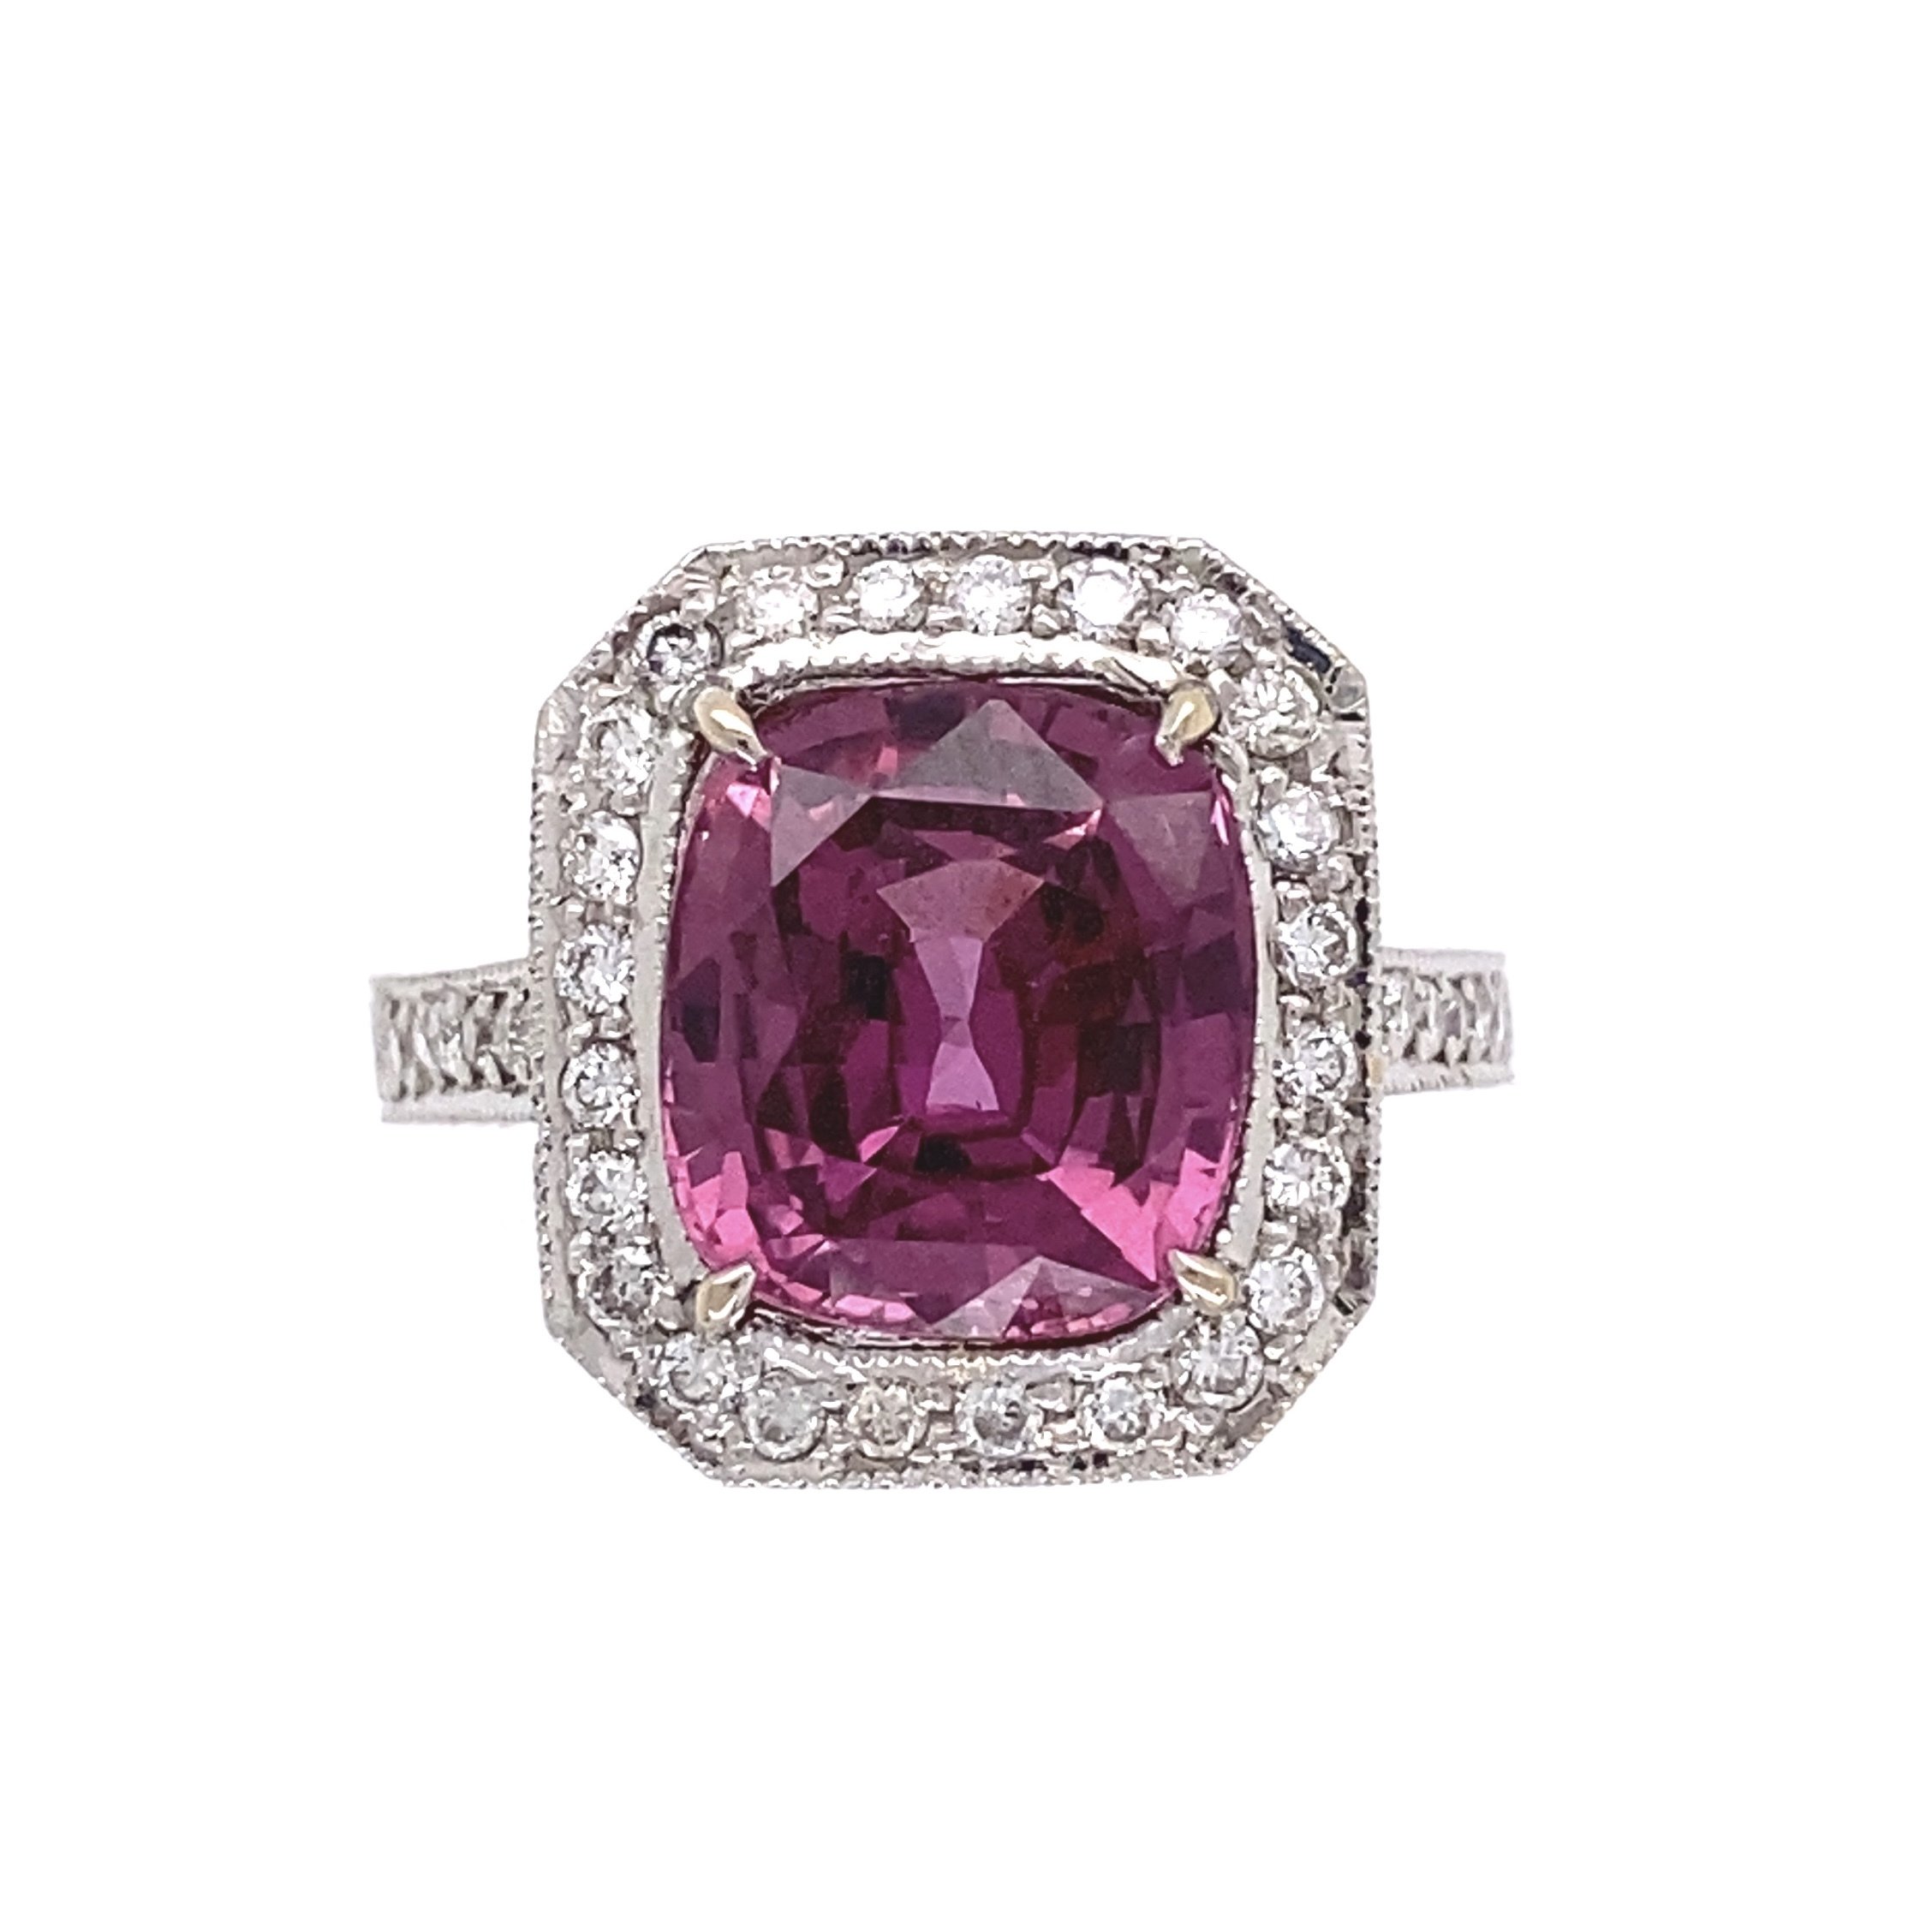 18K White Gold 3.75ct Cushion Pink Sapphire Ring. .55tcw pave diamonds, engraving, s6.25